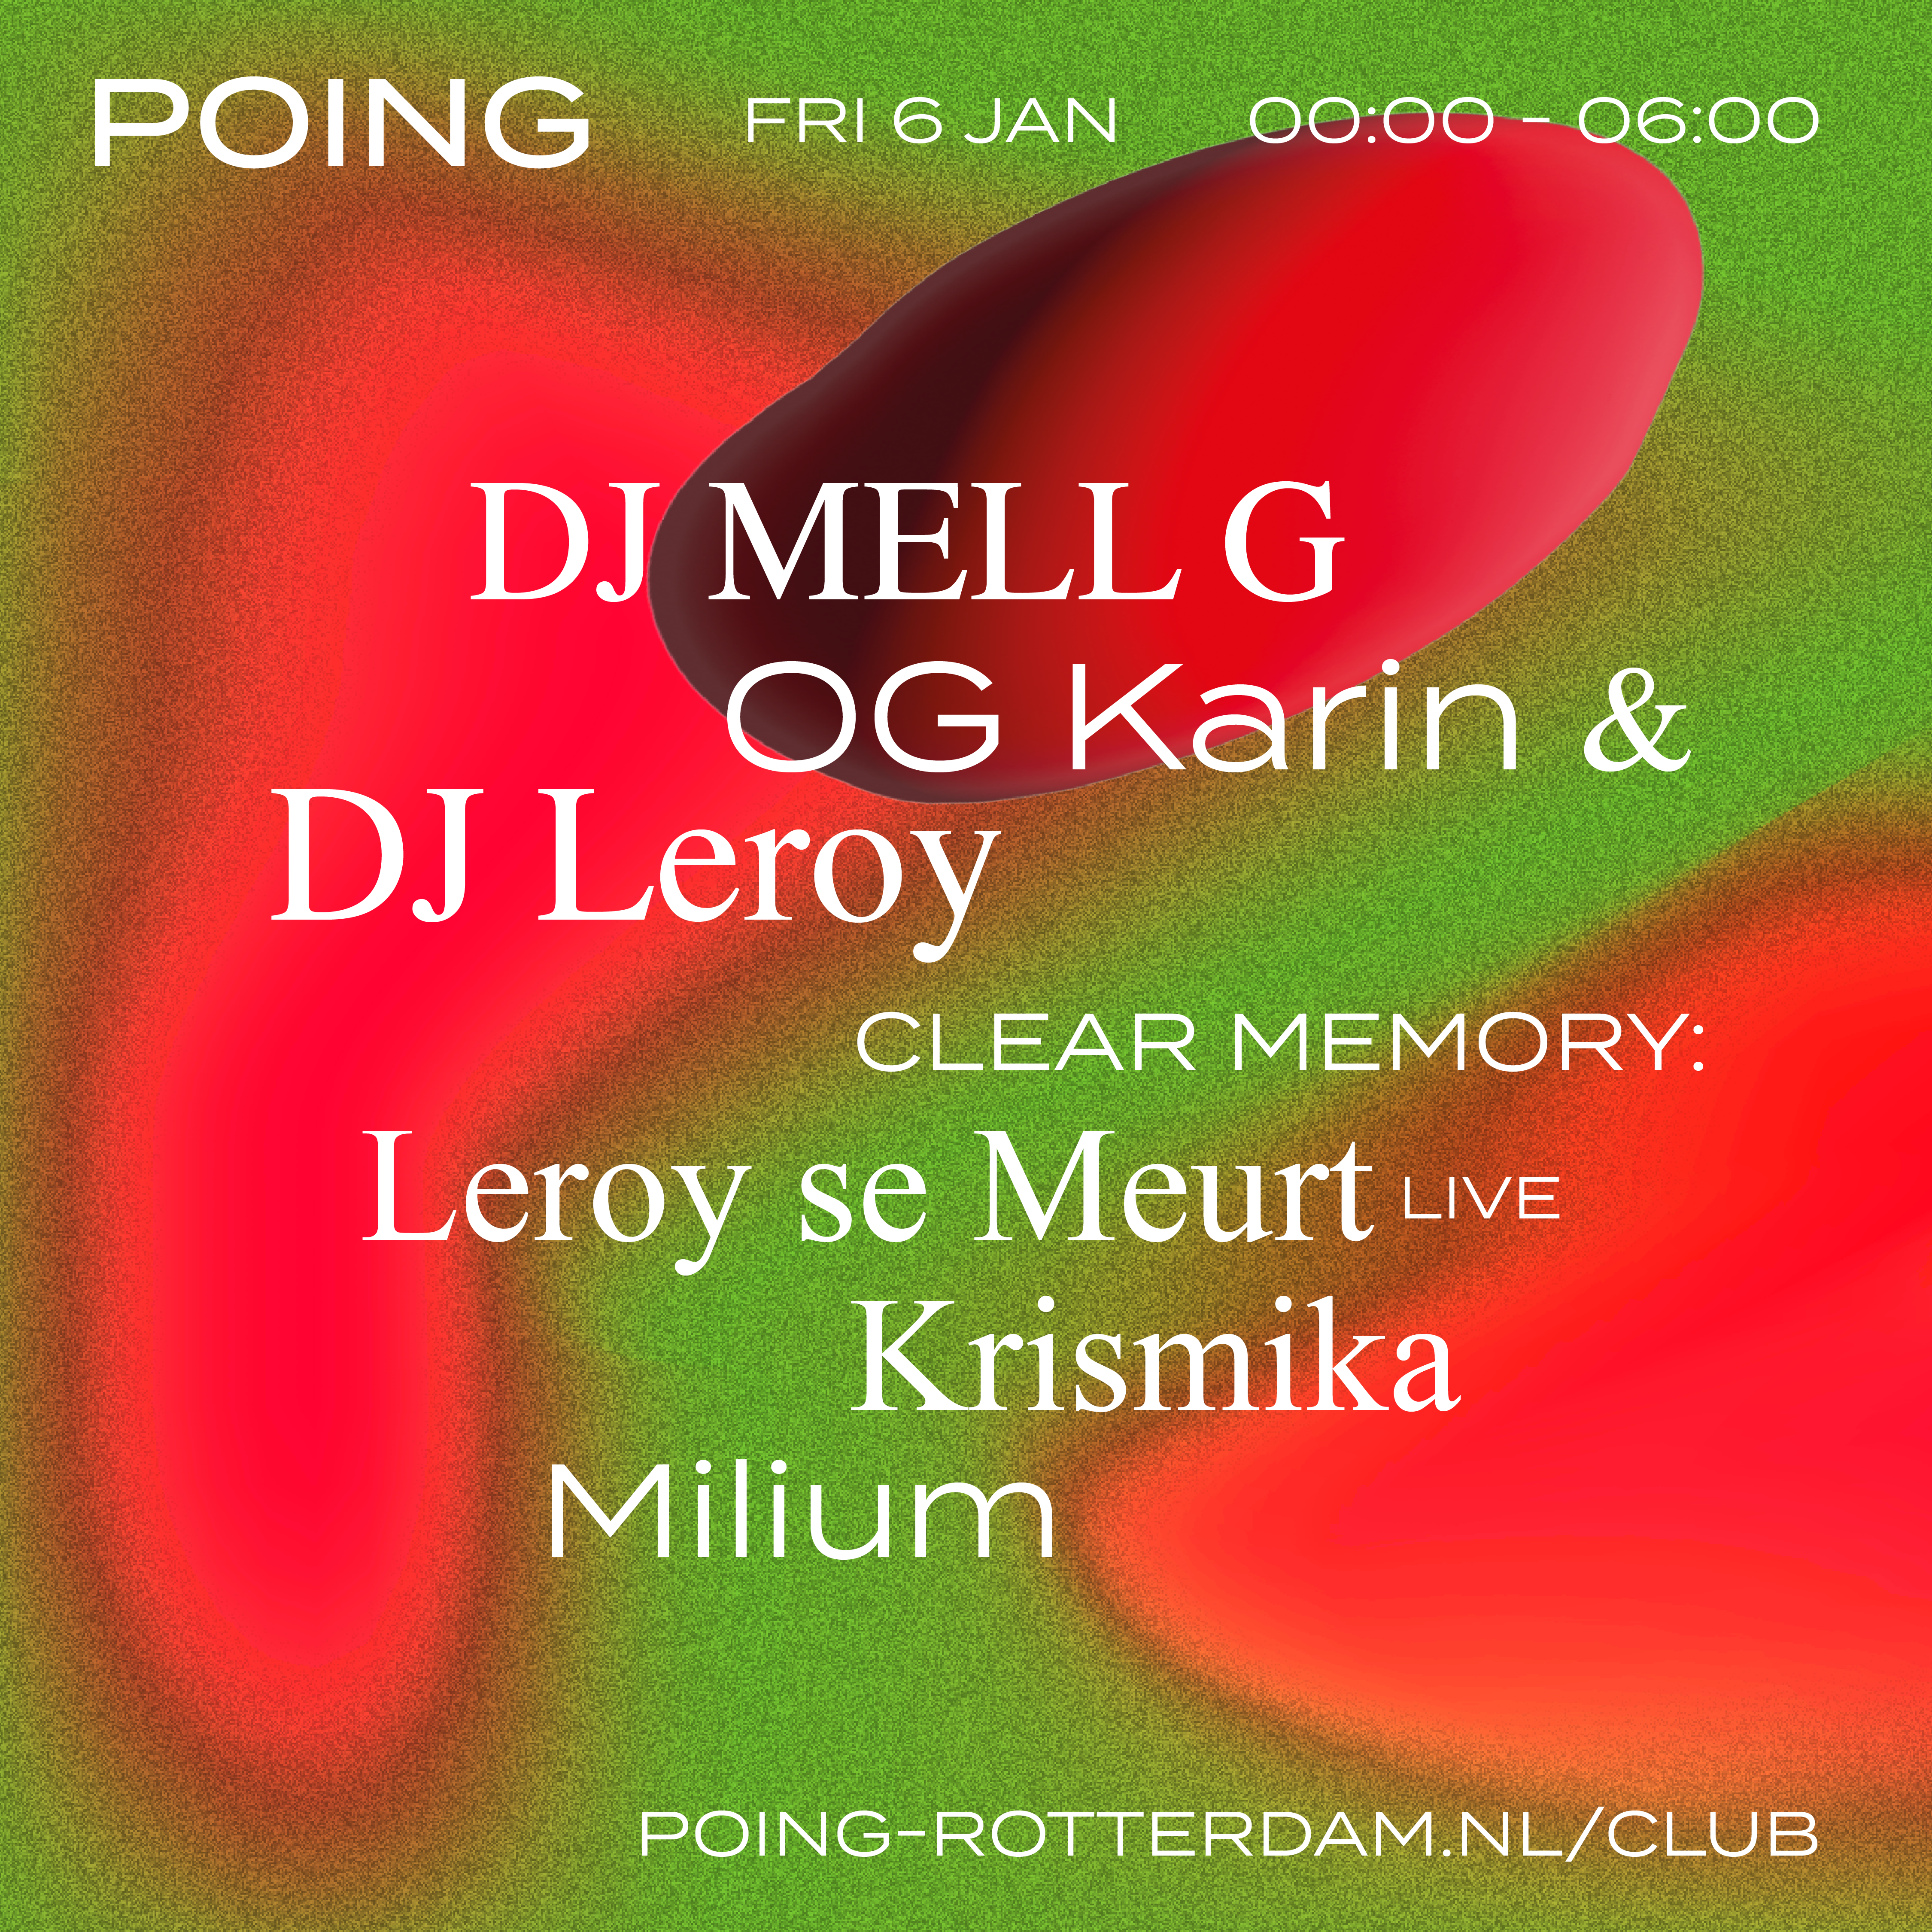 POING: DJ MELL G, OG Karin & DJ Leroy, Leroy Se Meurt (live), Krismika, Milium - フライヤー表